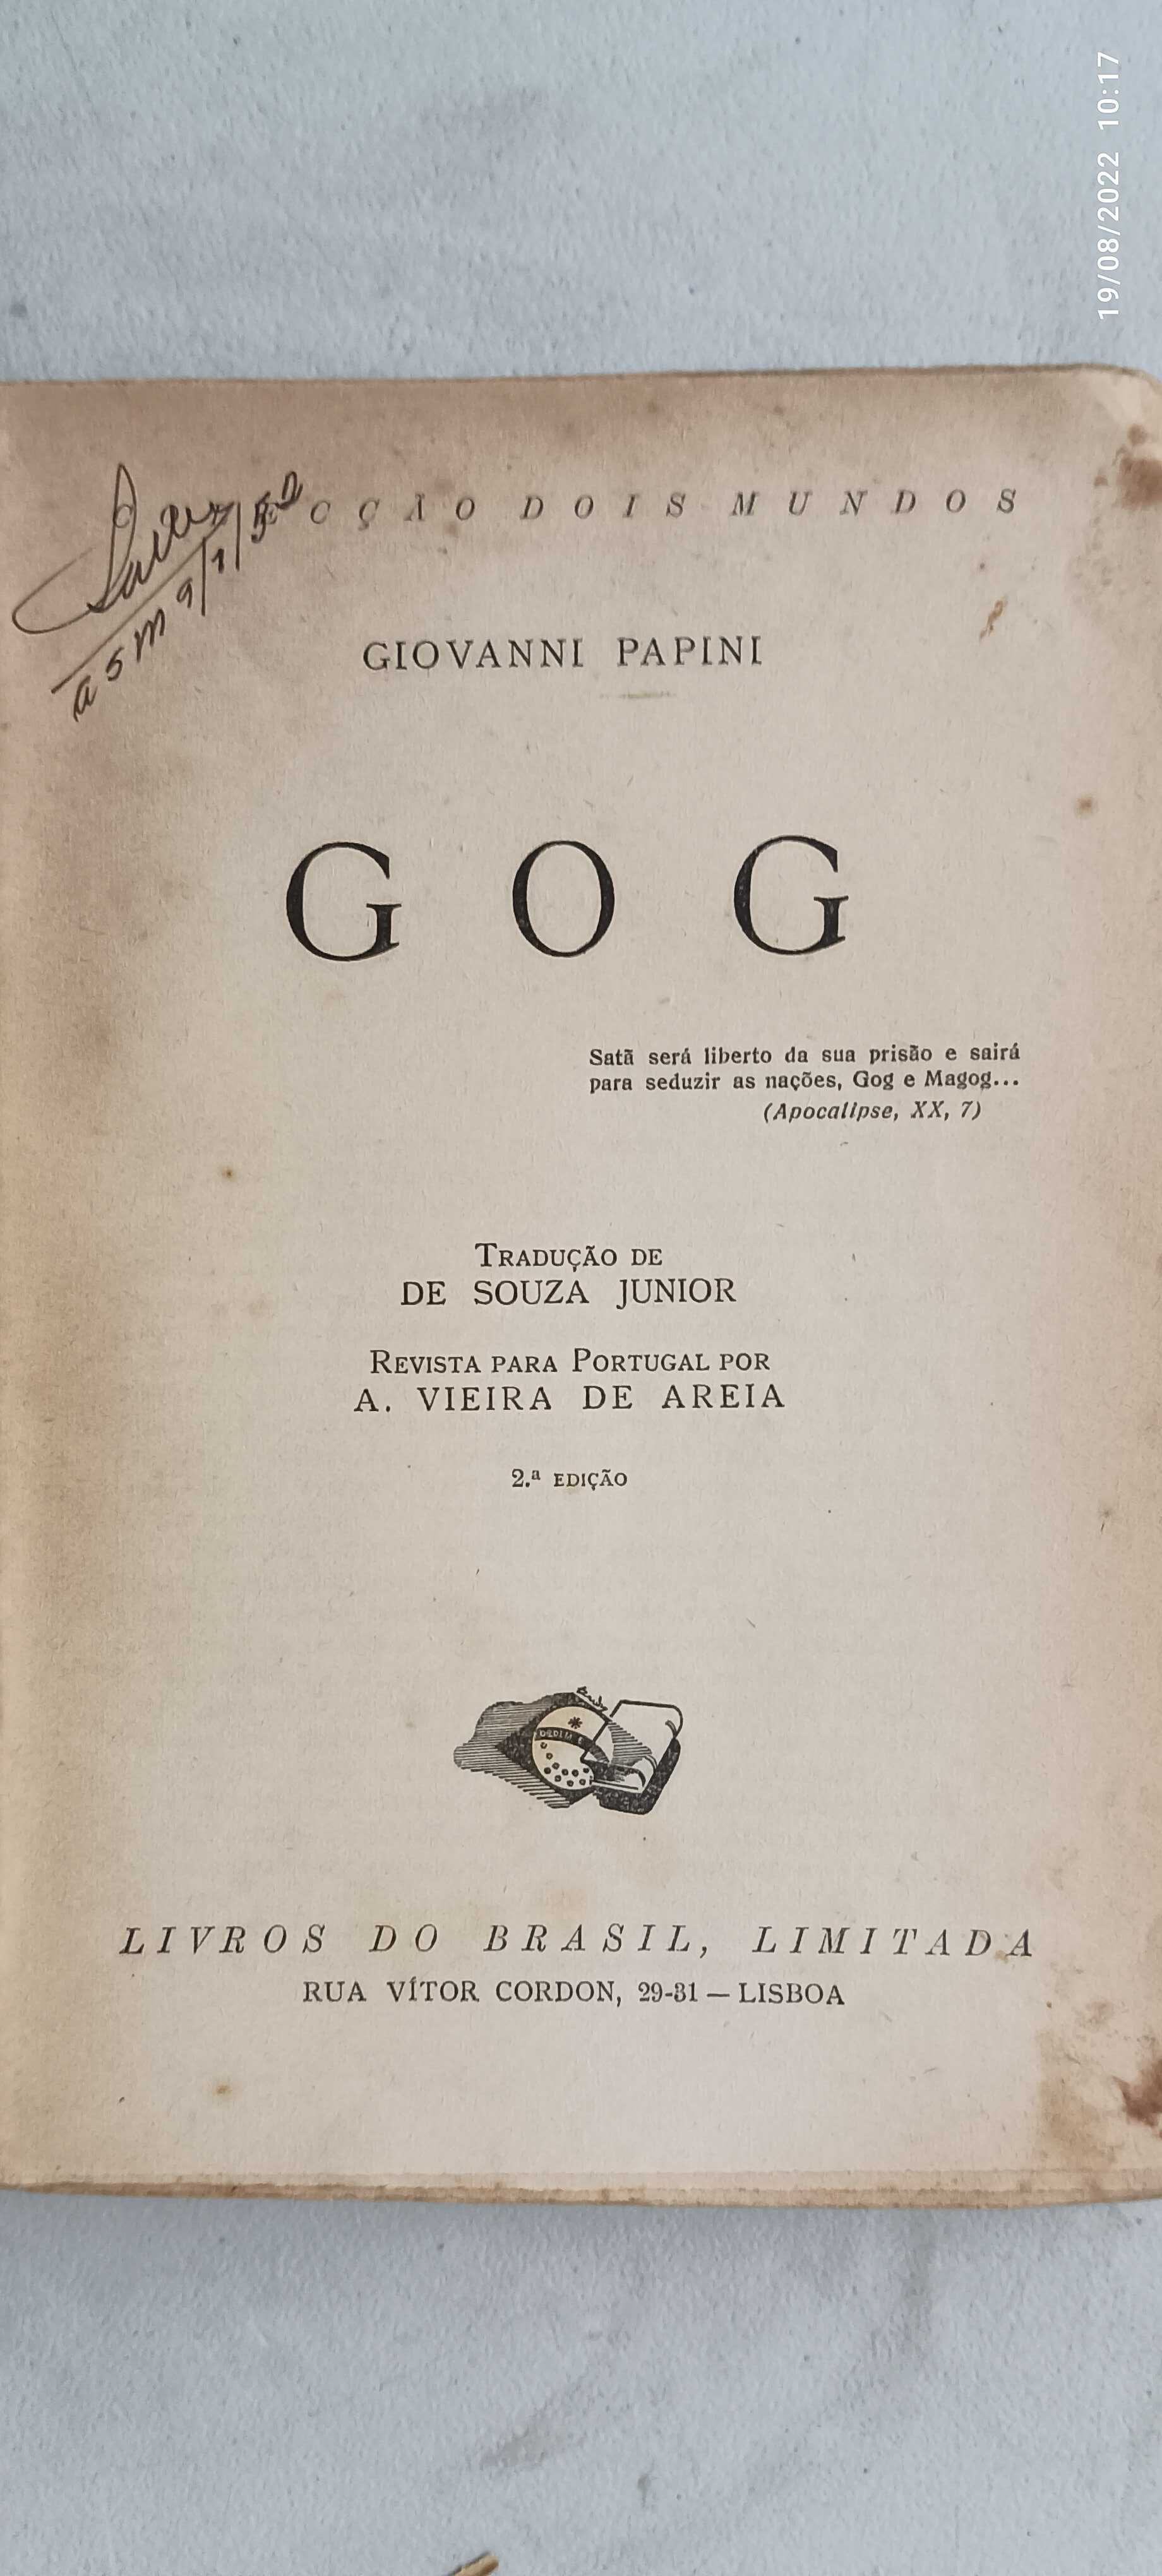 Livros Pa-3 - Giovanni Papini - GOG